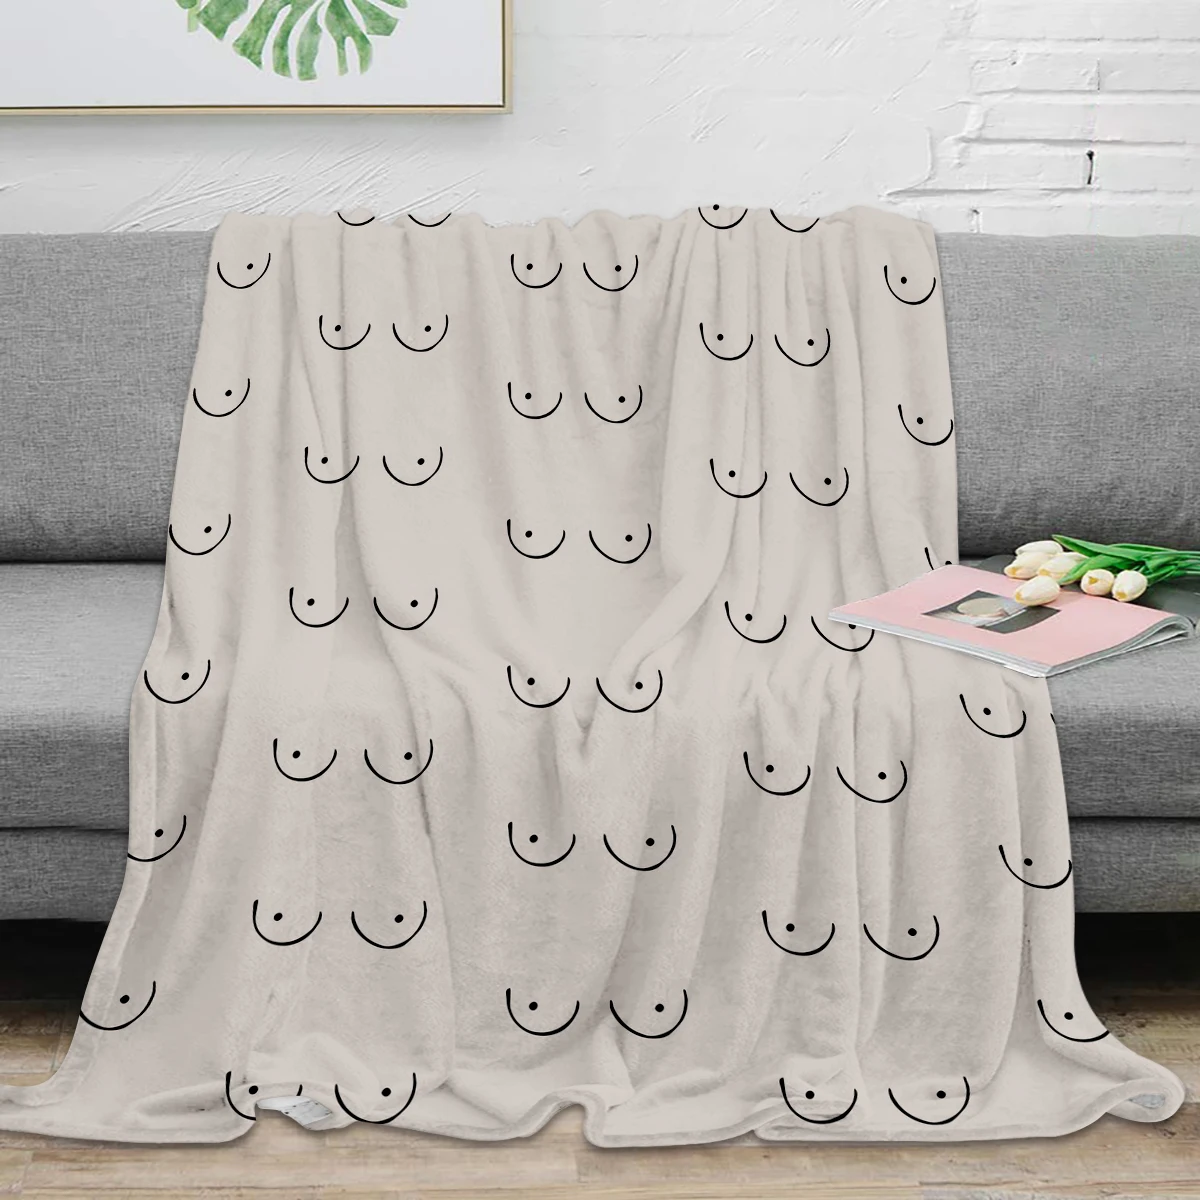 

Boobs Throw Blanket Soft Warm Microfiber Blanket Flannel Blanket Blankets For Beds